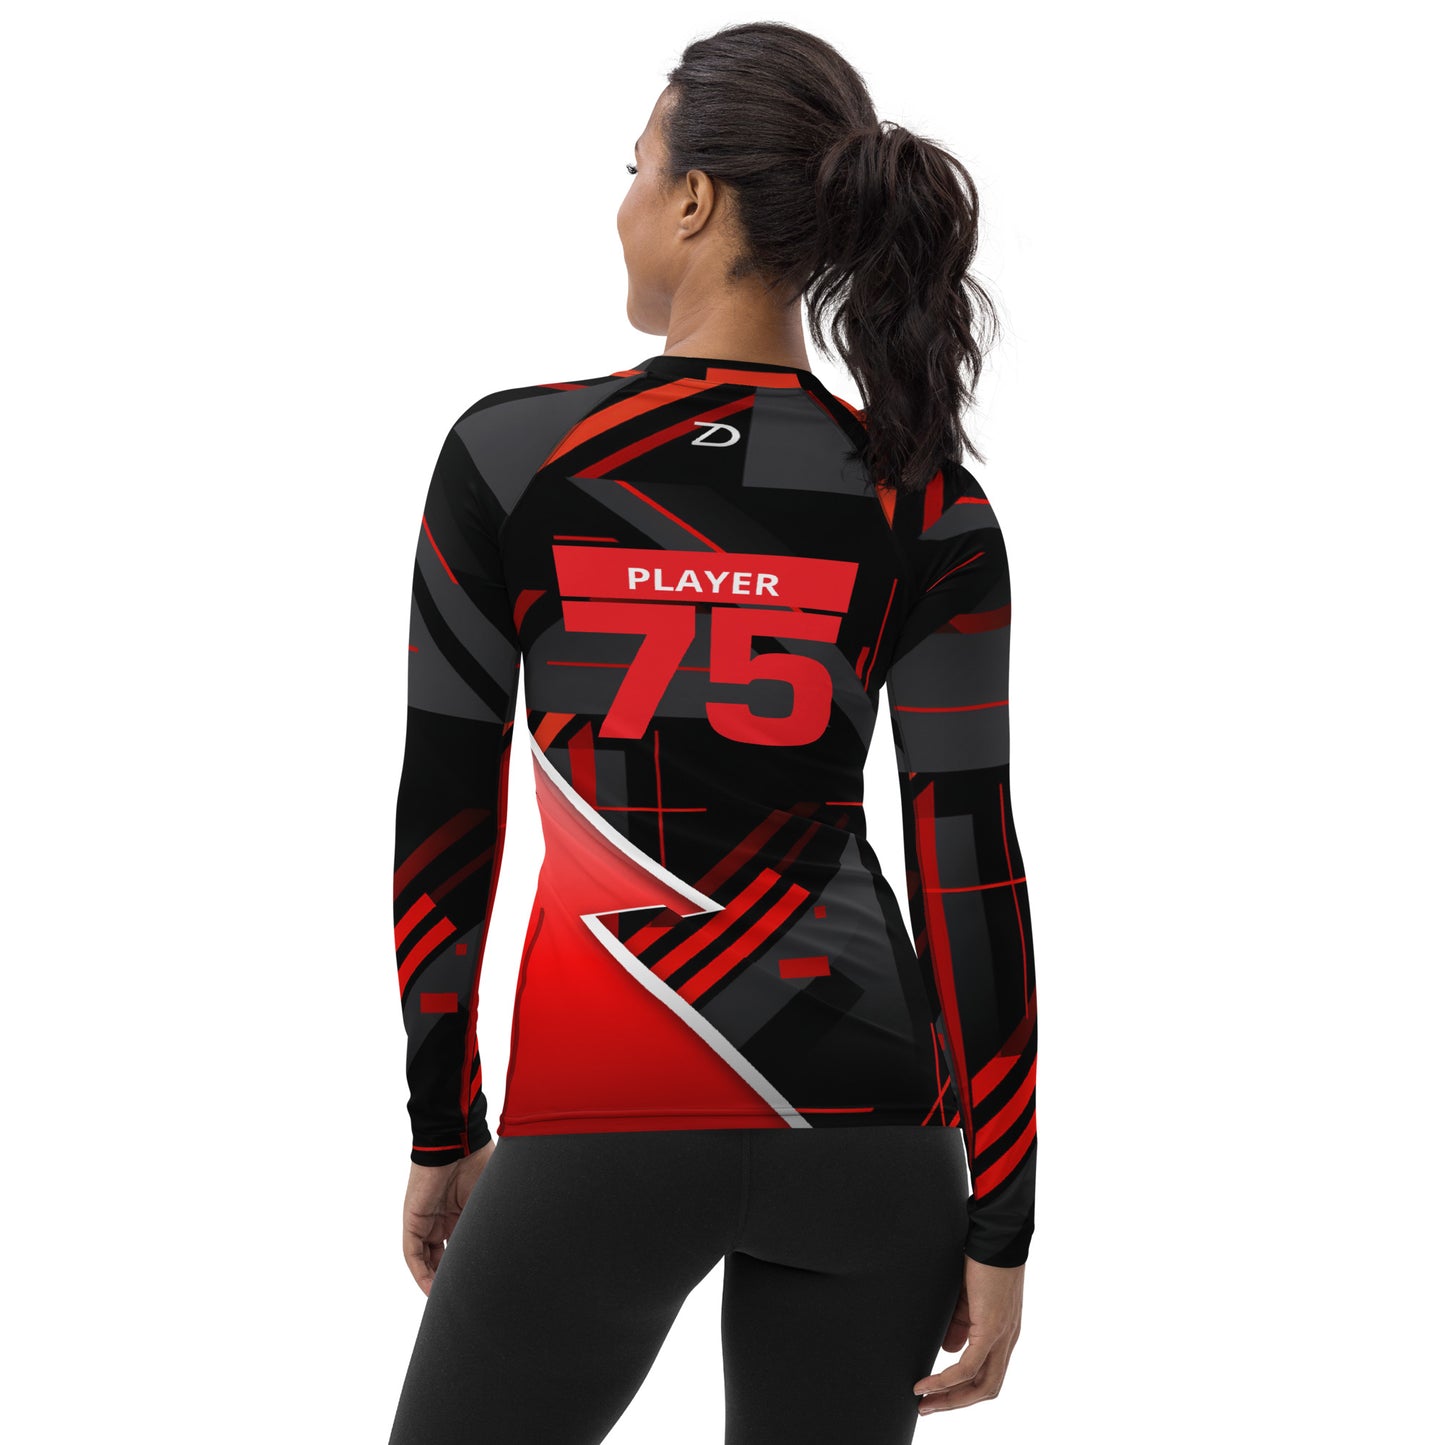 Neduz Crimson Ravens Women's Long-Sleeve Rash Guard | UPF 50+, Comfortable, Slim Fit